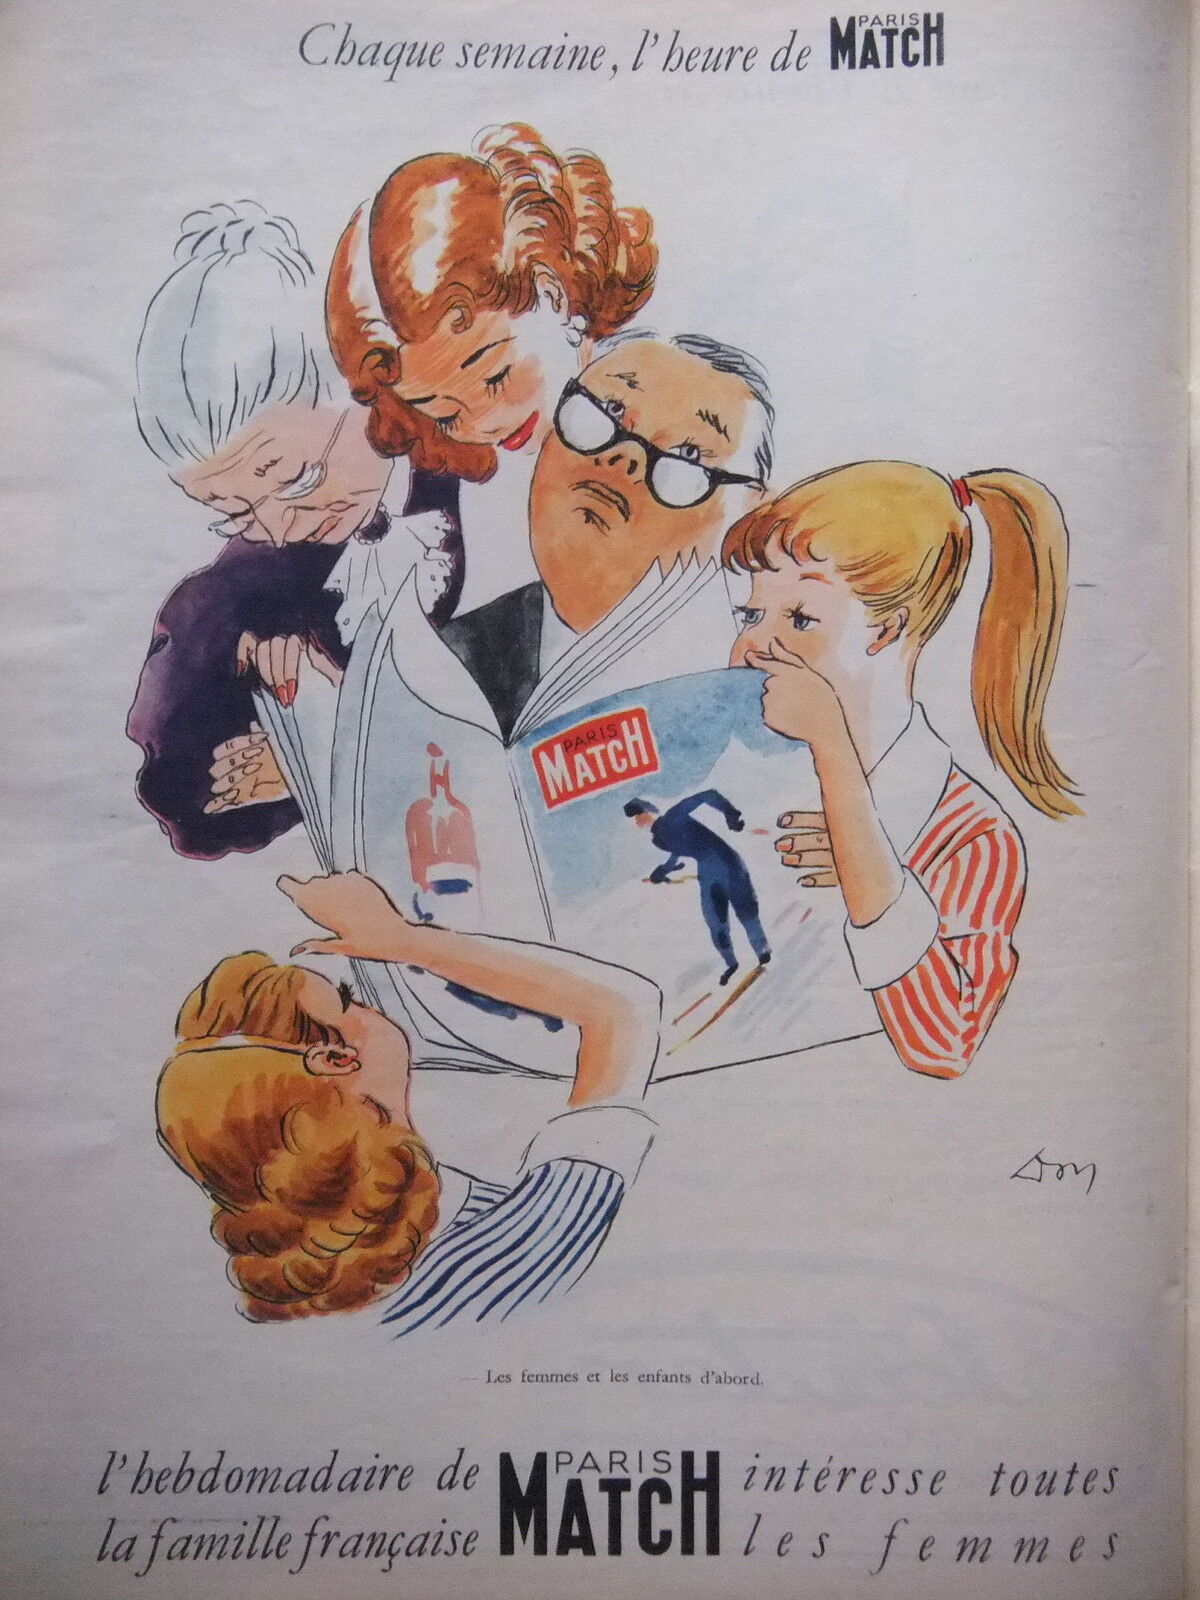 1956 ADVERTISING L\'HEBWEEKADAIRE PARIS MATCH INTERESTS FAMILIES - ADVERTISING